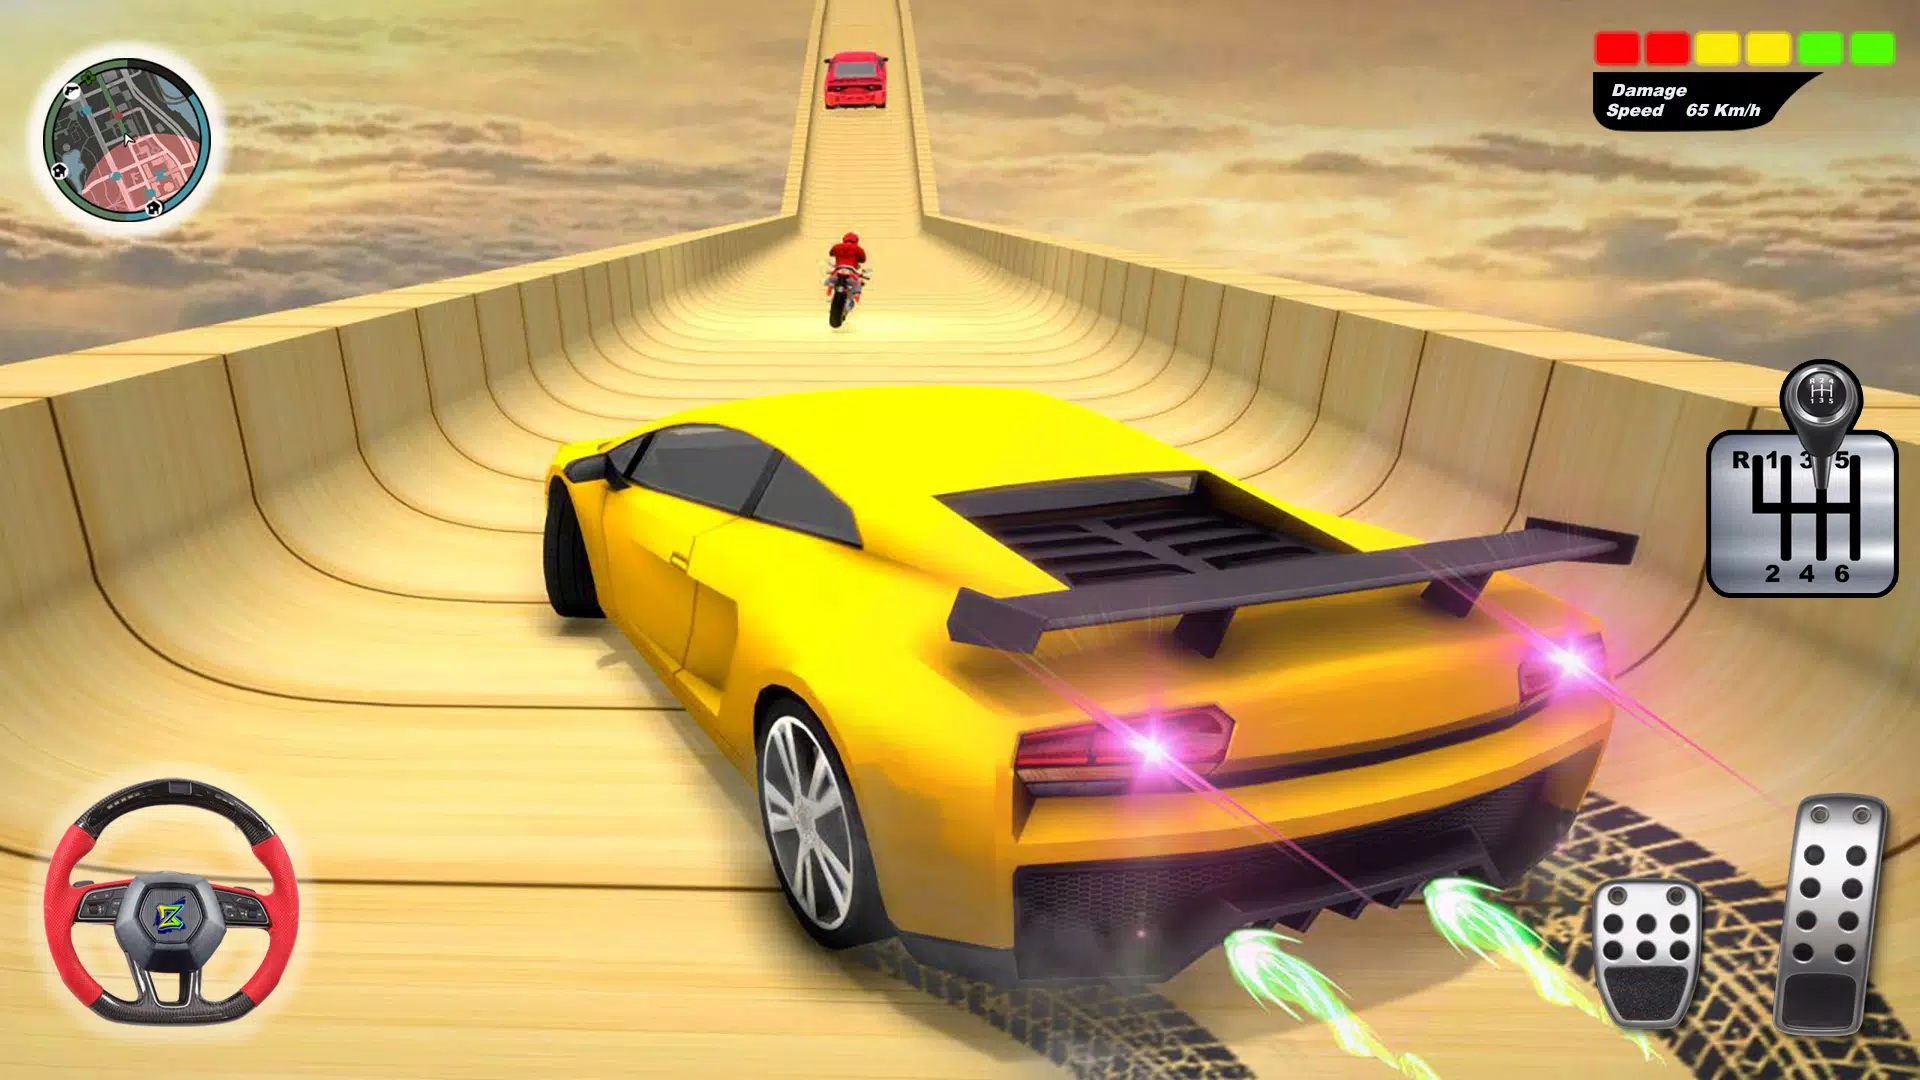 Descarga de APK de coche juegos truco carreras para Android